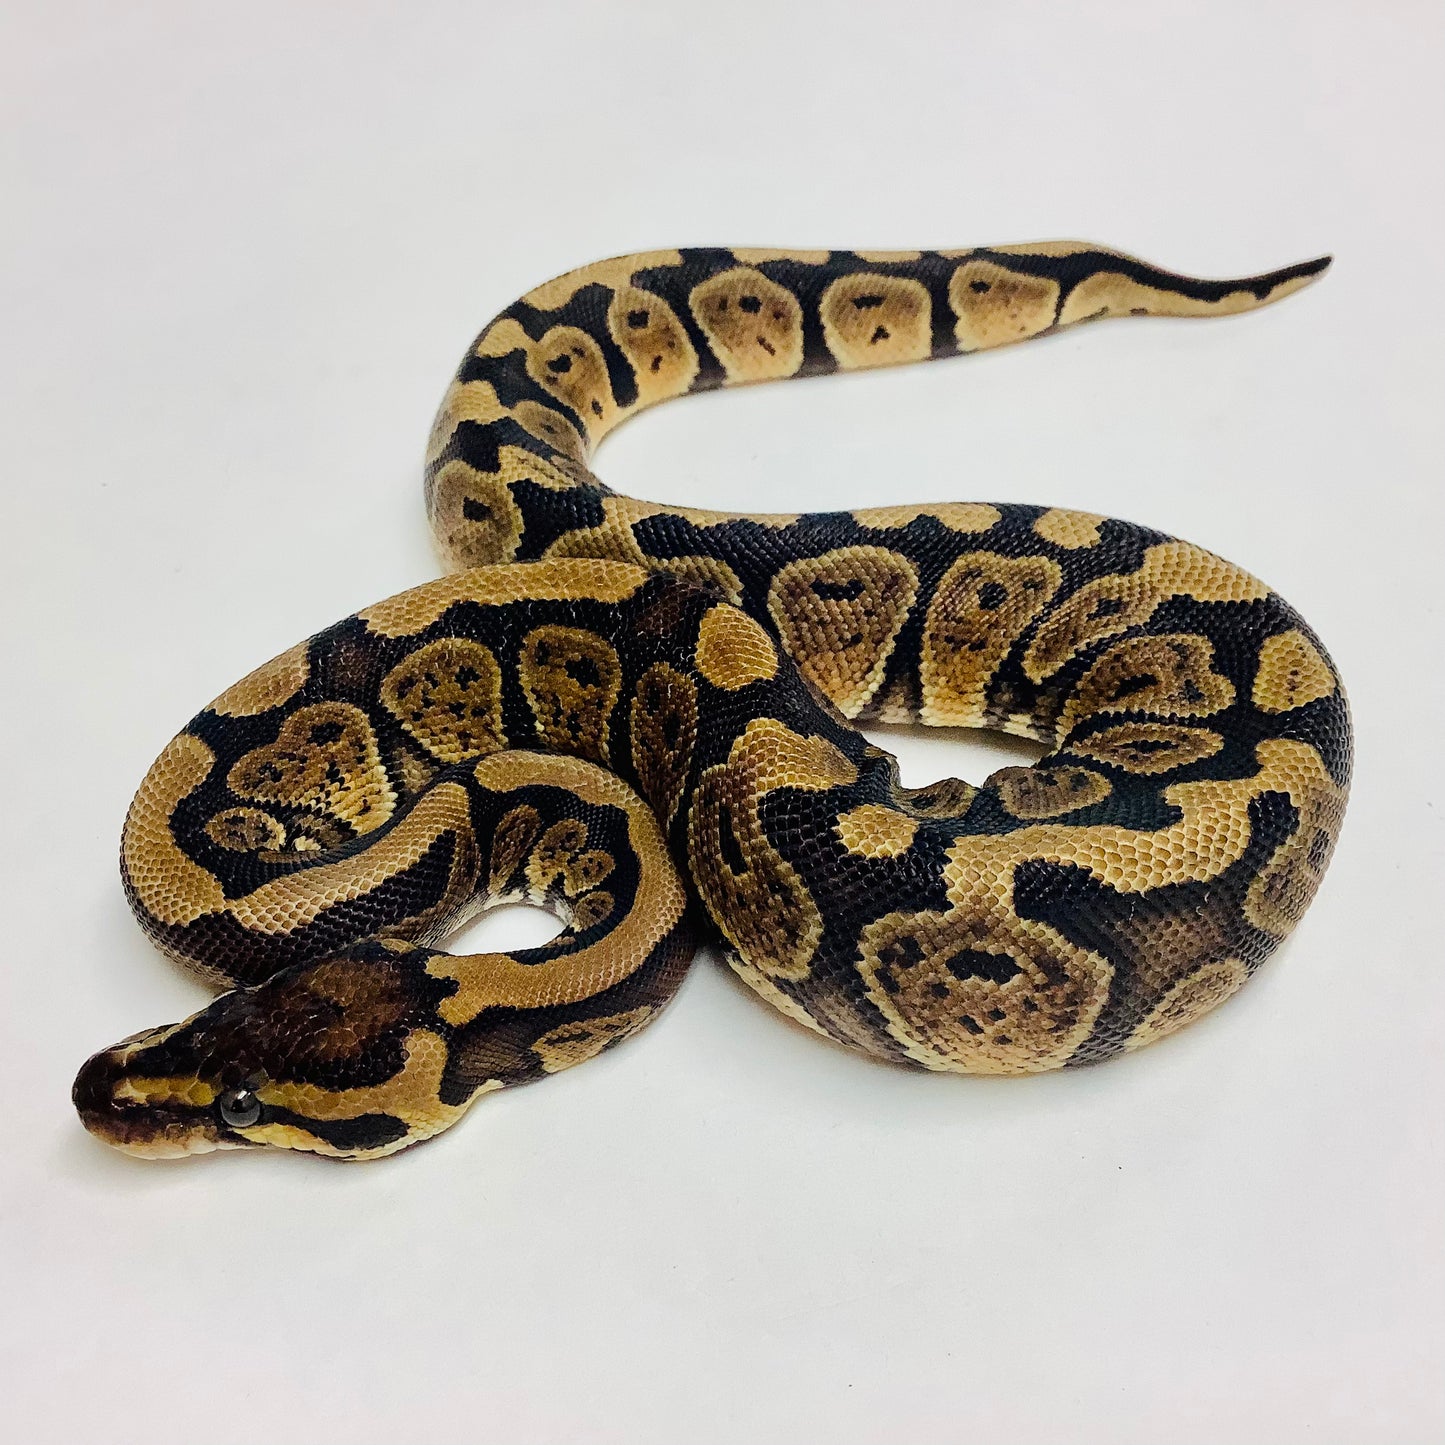 Red Stripe Ball Python - Female #2021F02